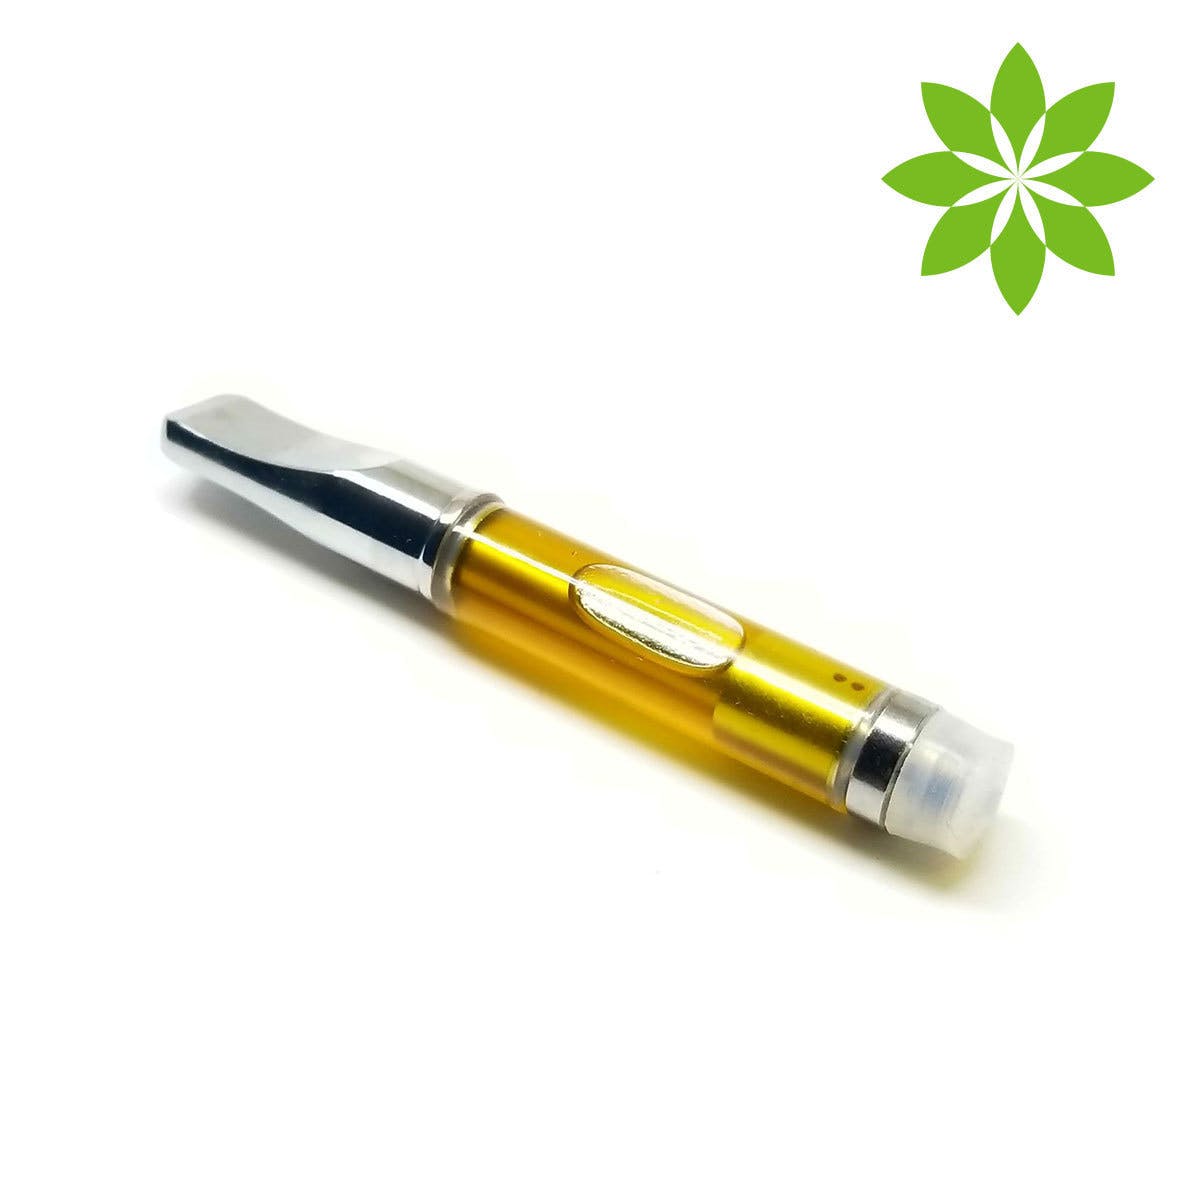 o.Pen Oil Cartridge S, H, I 500mg or 1000mg